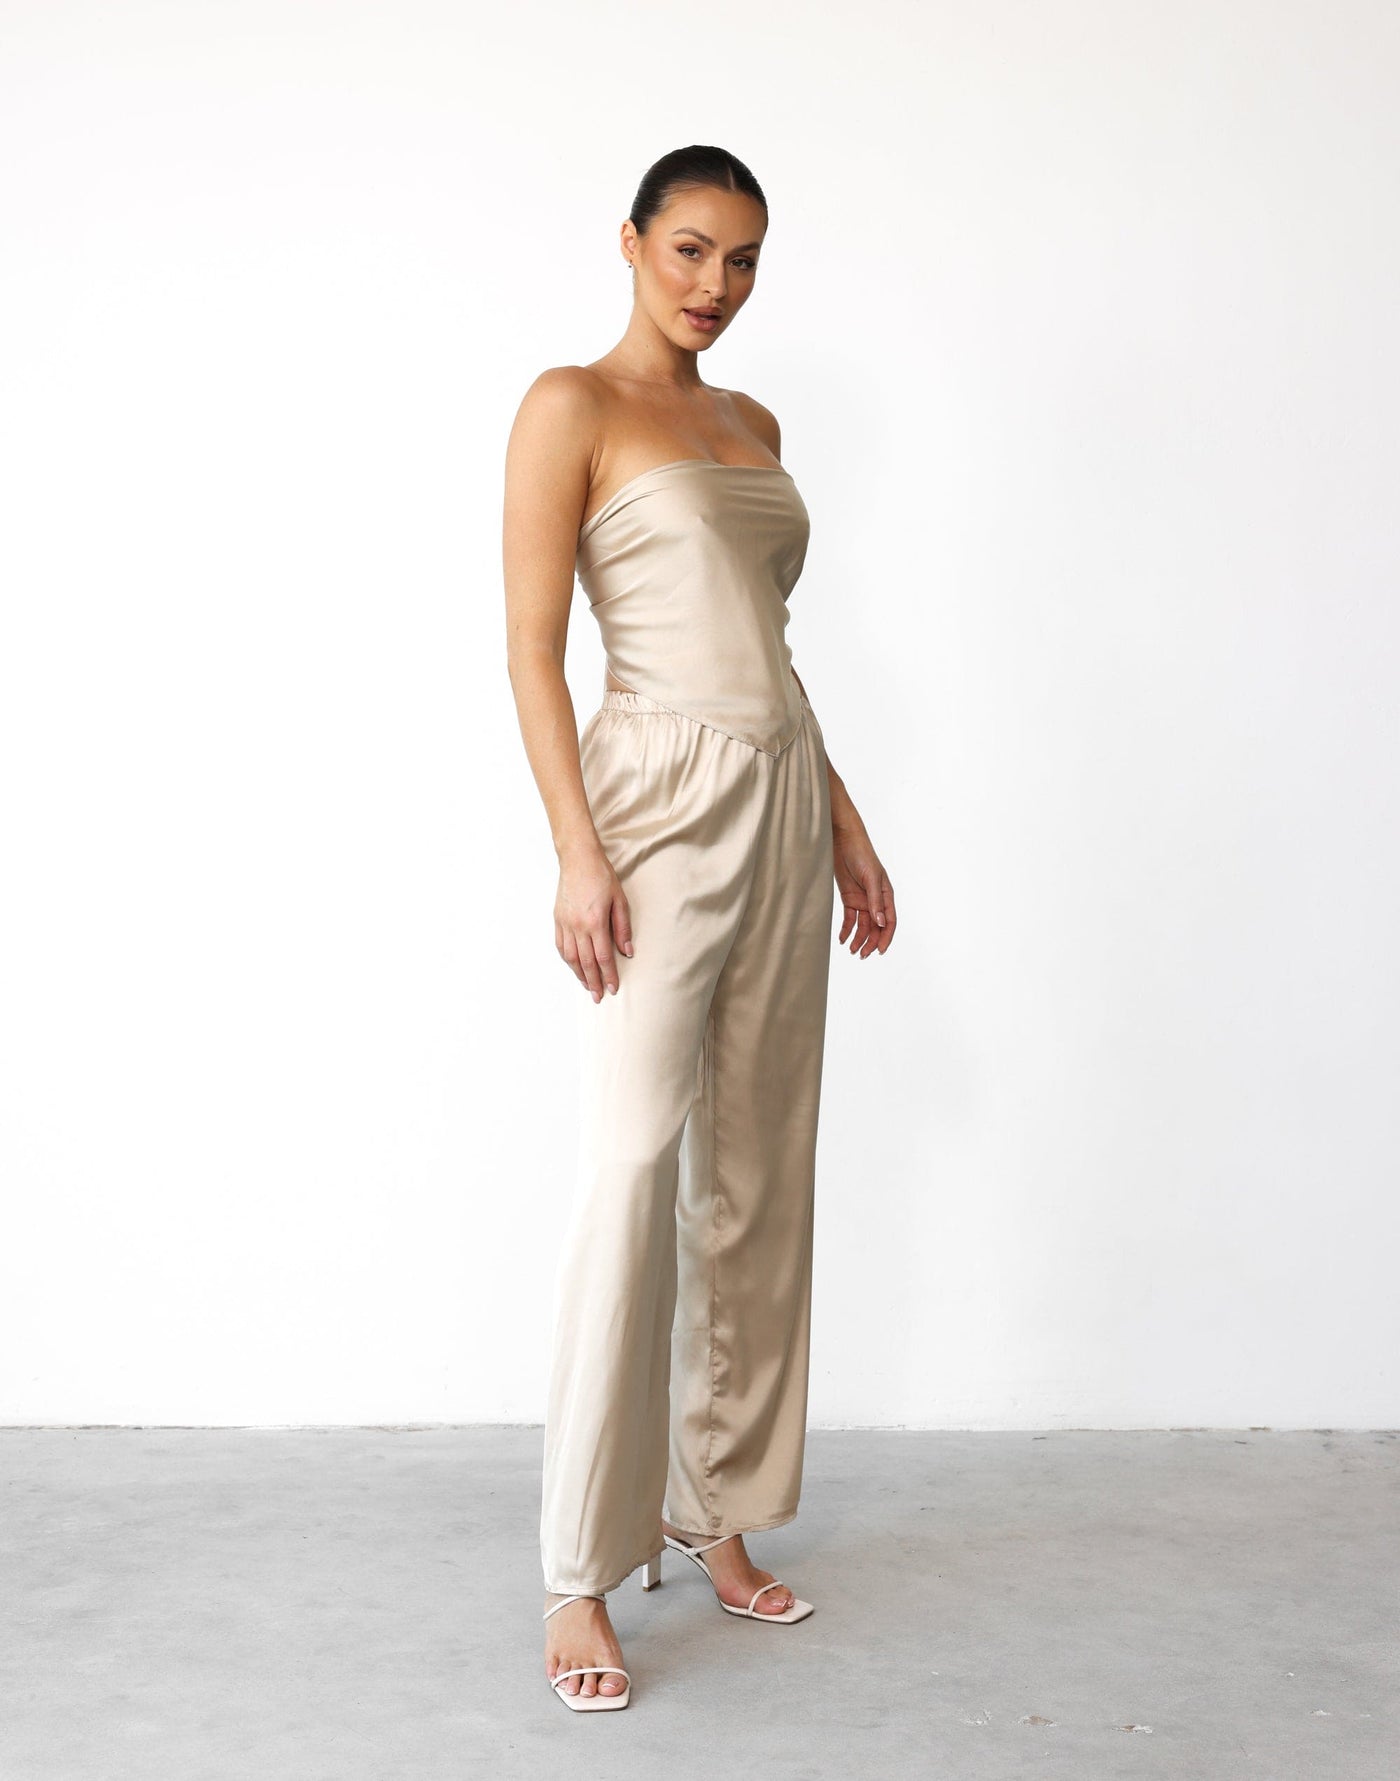 Jahmilla Scarf Top (Beige) - Satin Adjustable Tie Scarf Top - Women's Top - Charcoal Clothing